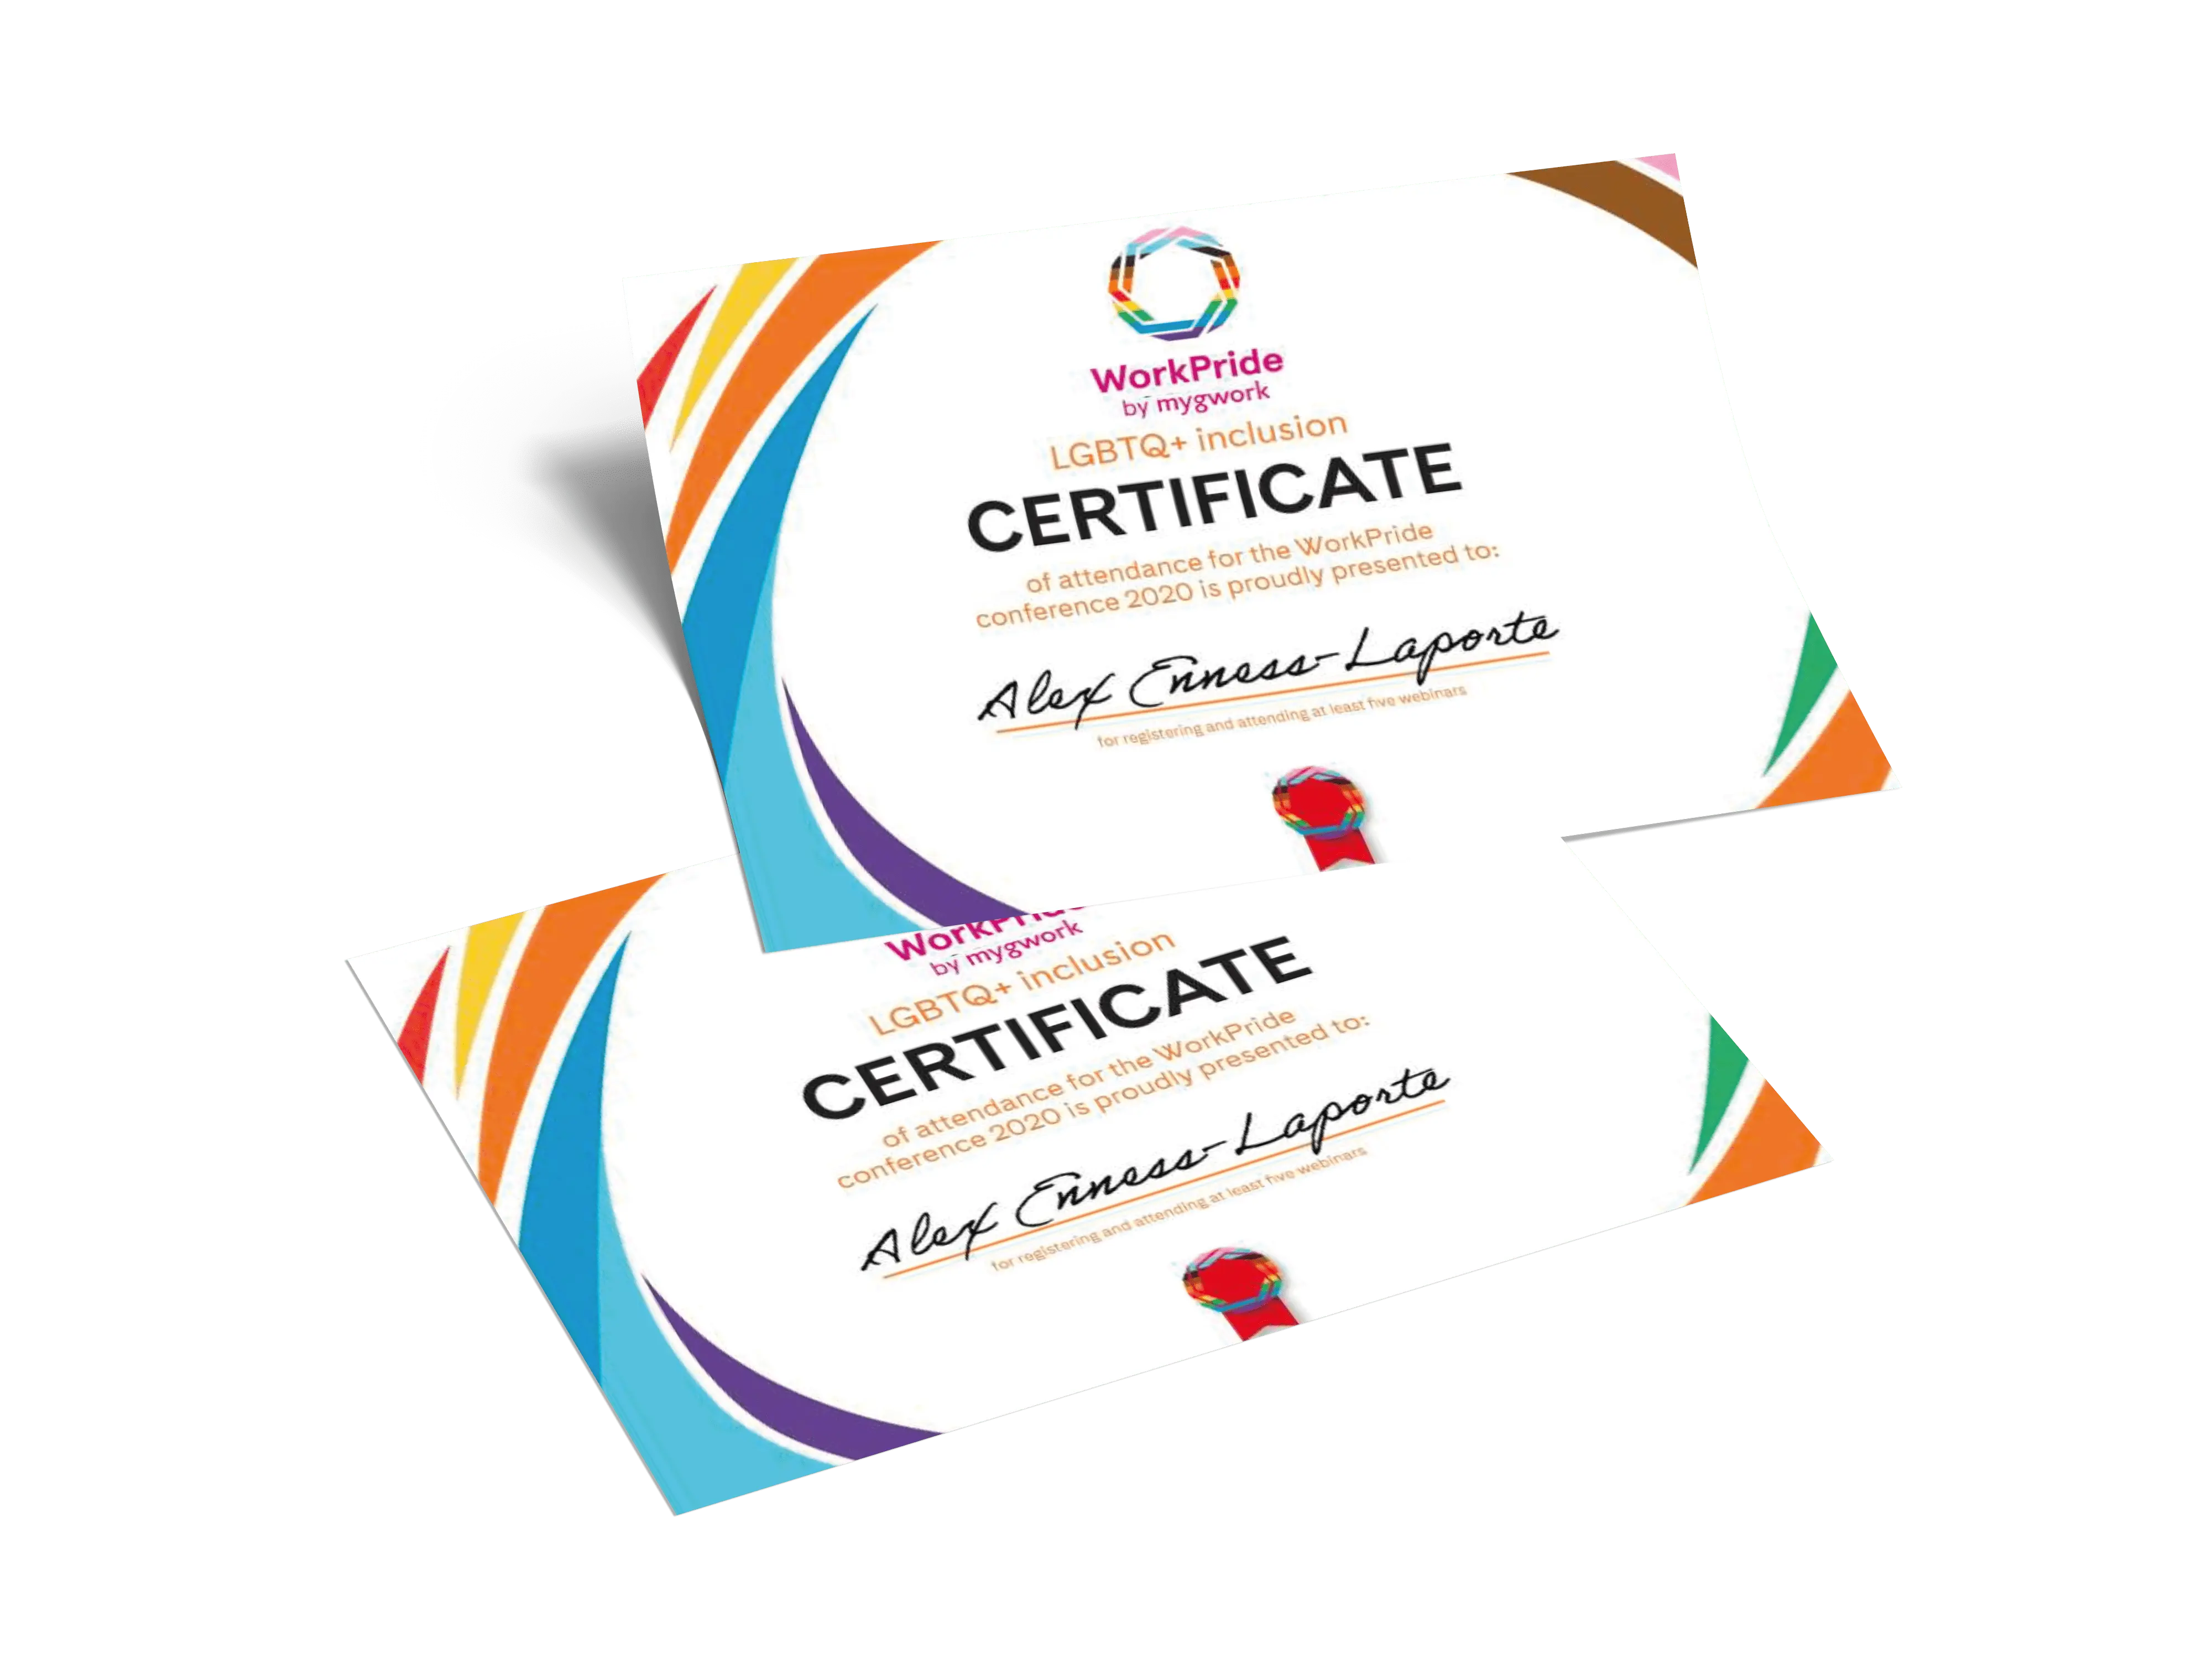 LGBTQ+ Inclusion Certificate